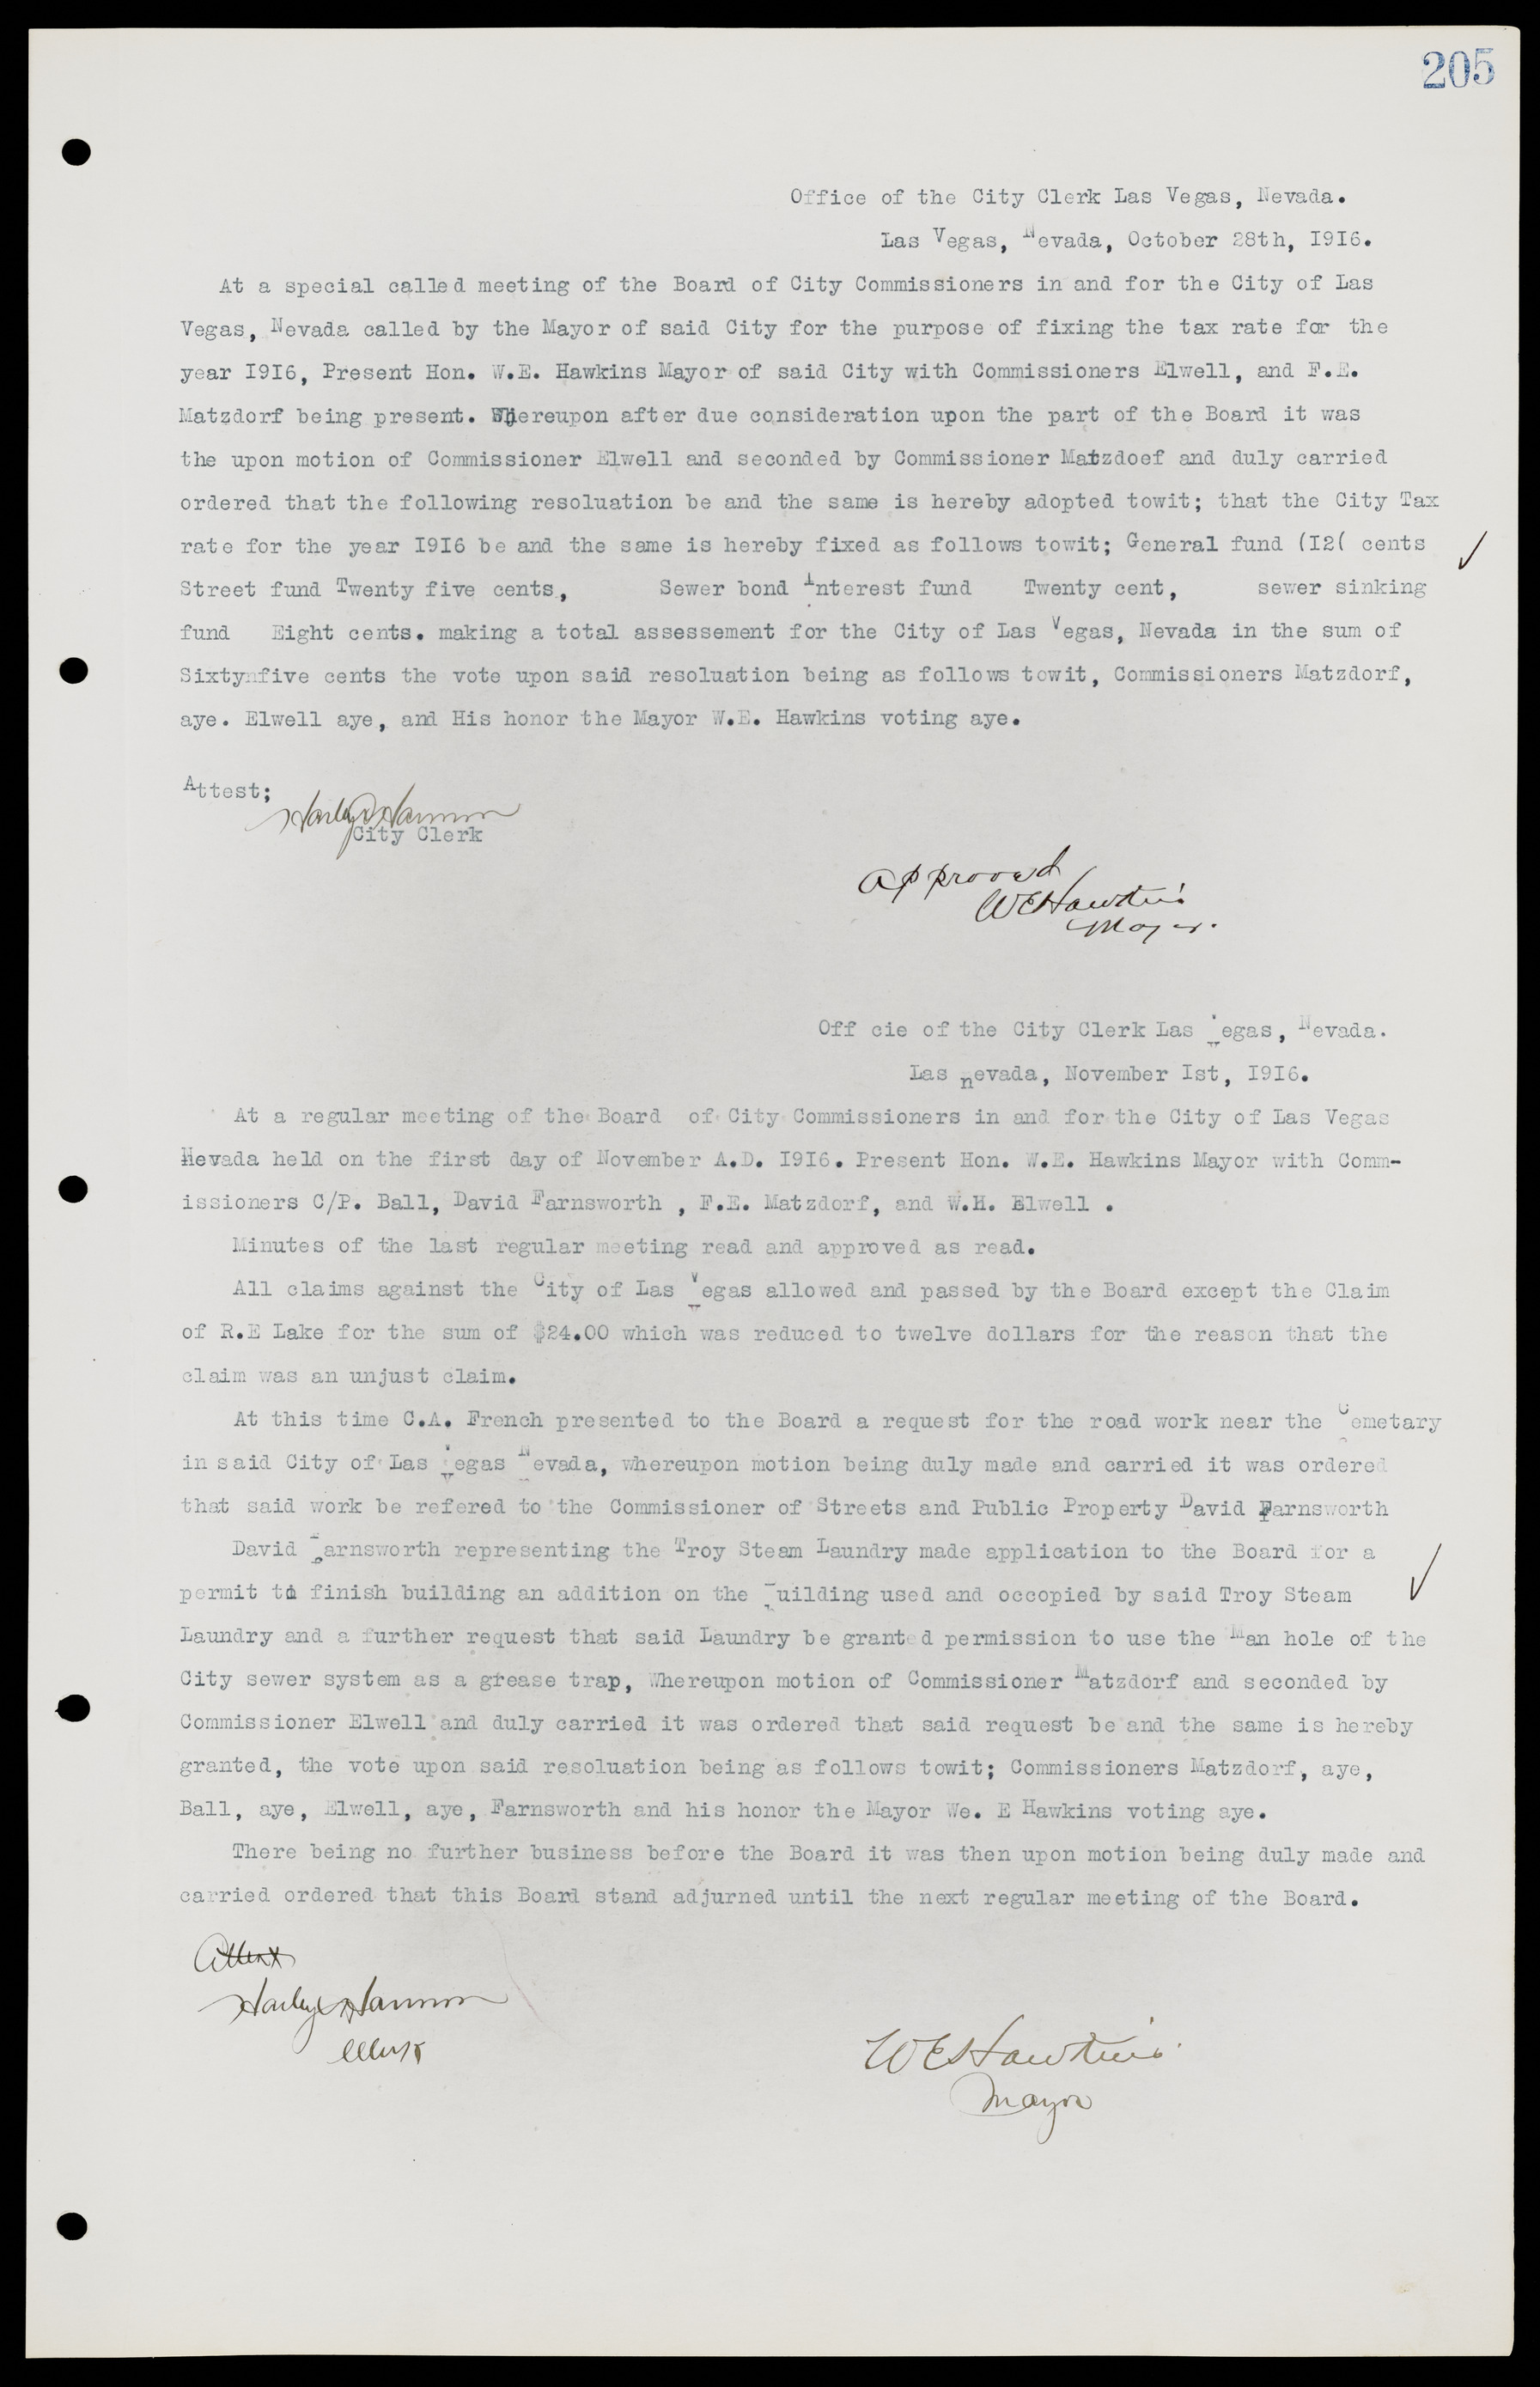 Las Vegas City Commission Minutes, June 22, 1911 to February 7, 1922, lvc000001-221